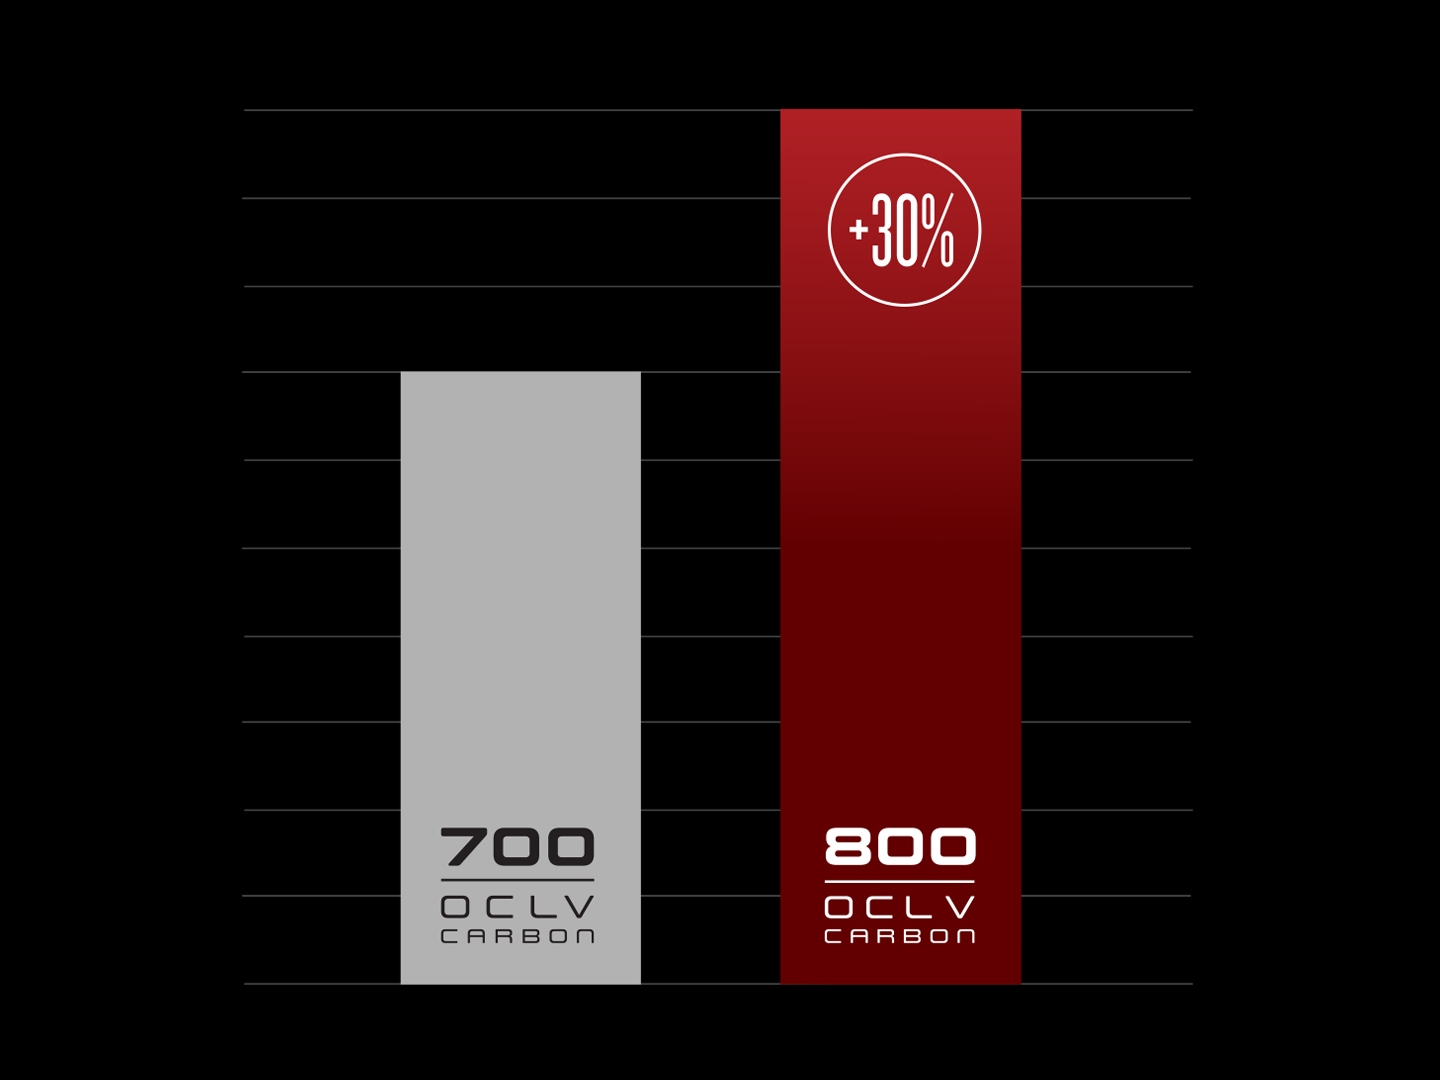 700 oclv carbon